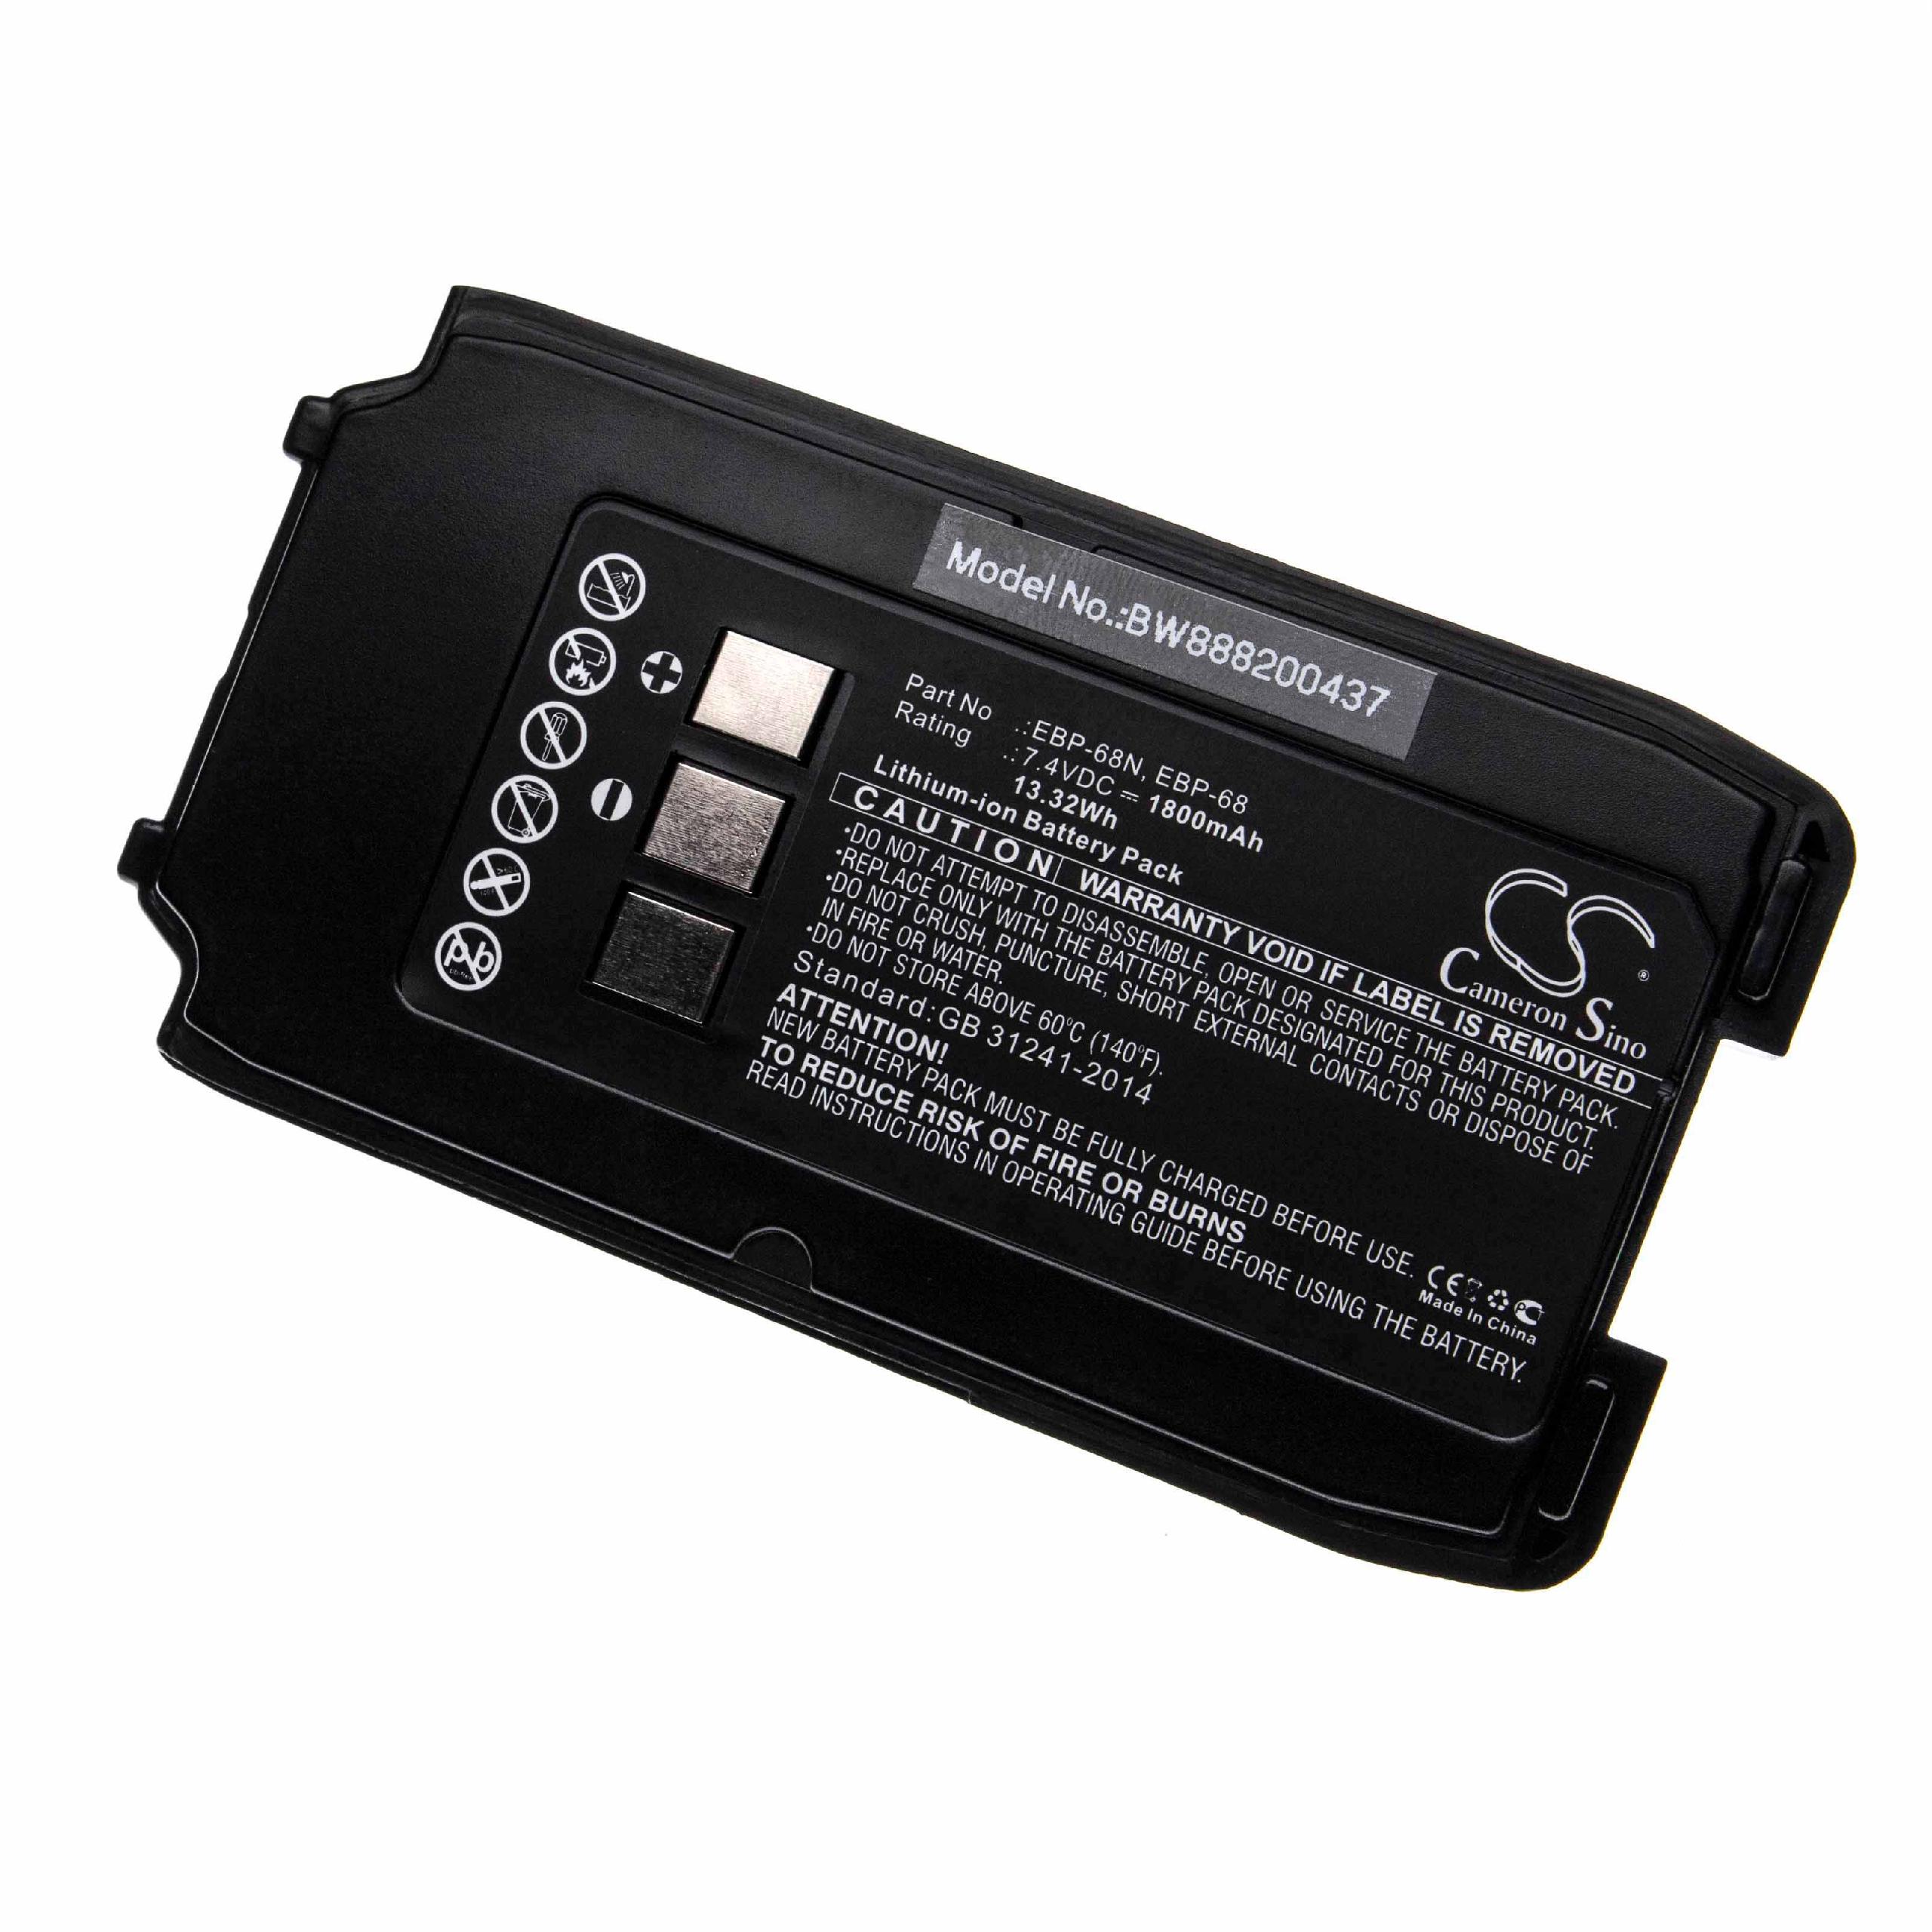 Radio Battery Replacement for Alinco EBP-68, EBP-68N - 1800mAh 7.4V Li-Ion + Belt Clip